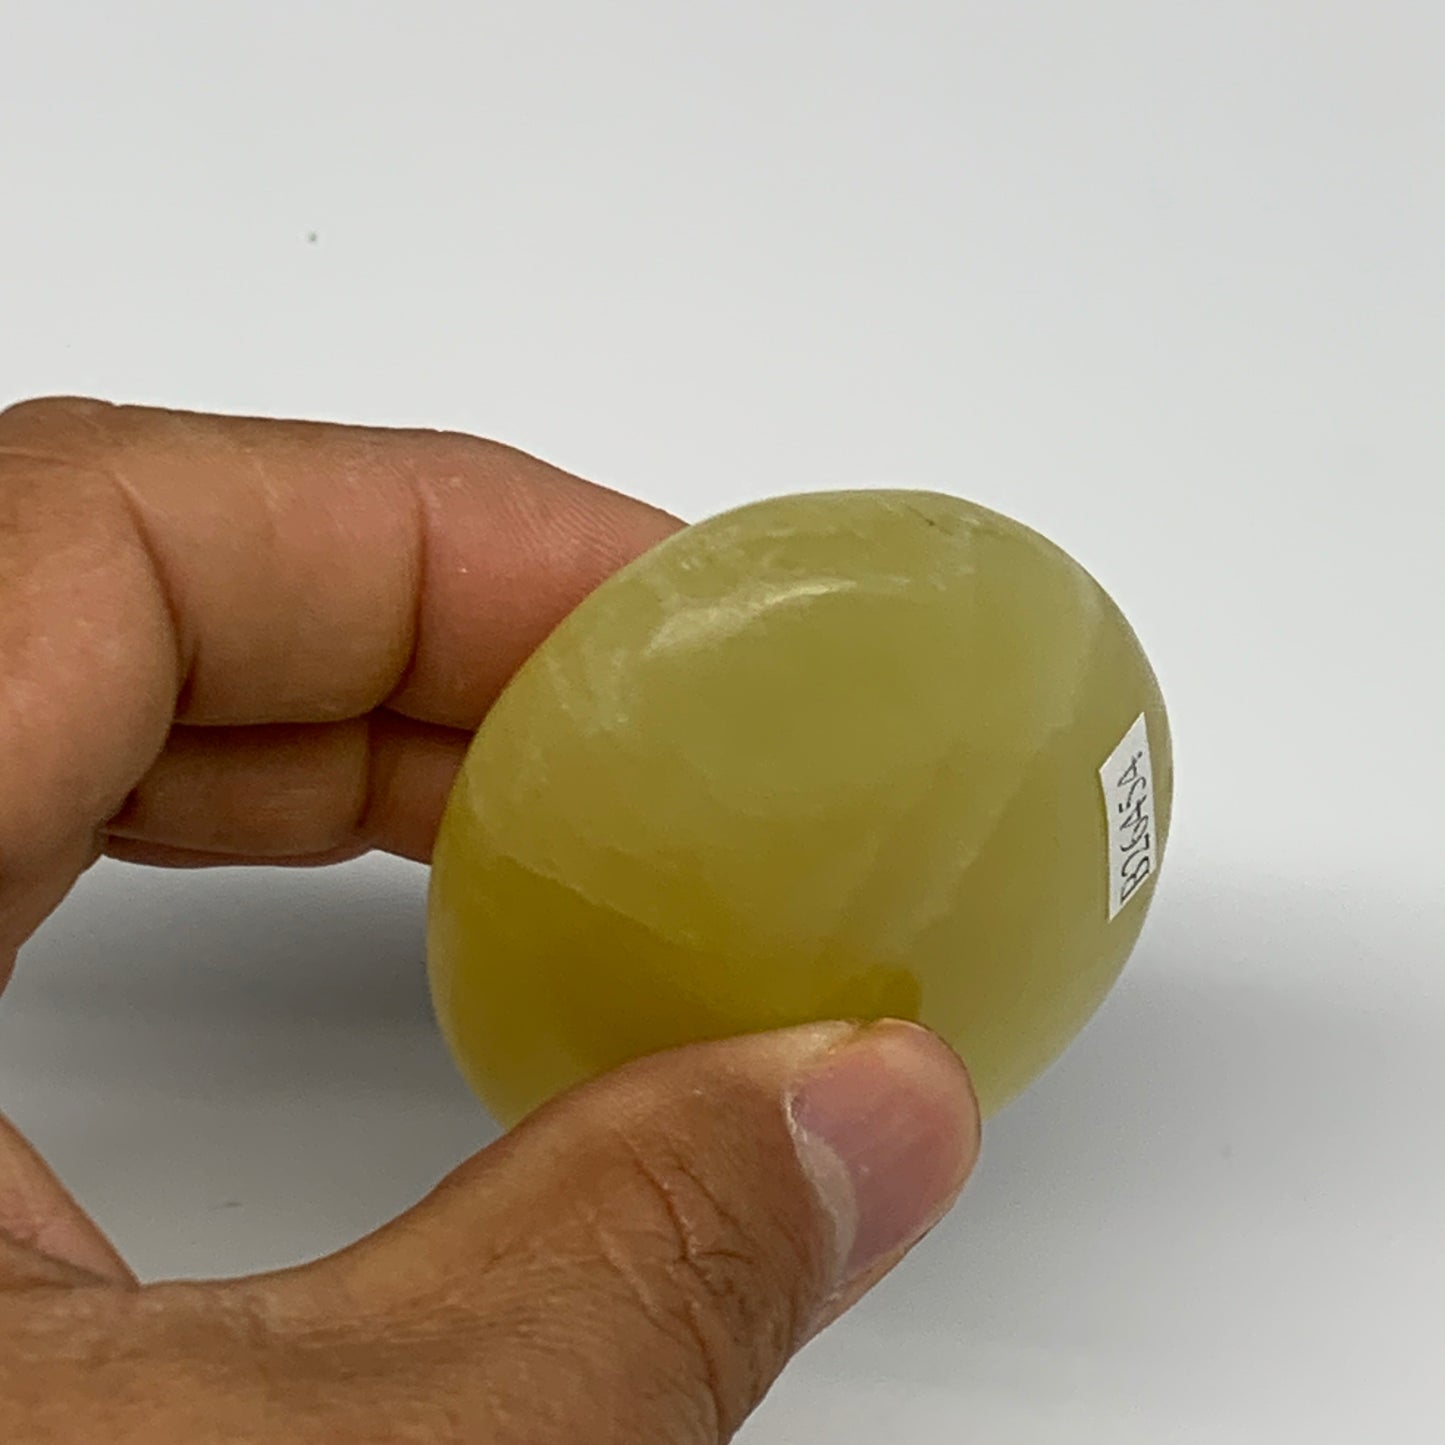 116g, 2.7"x1.8"x0.9", Lemon Calcite Palm-Stone Crystal Polished @Pakistan,B26454